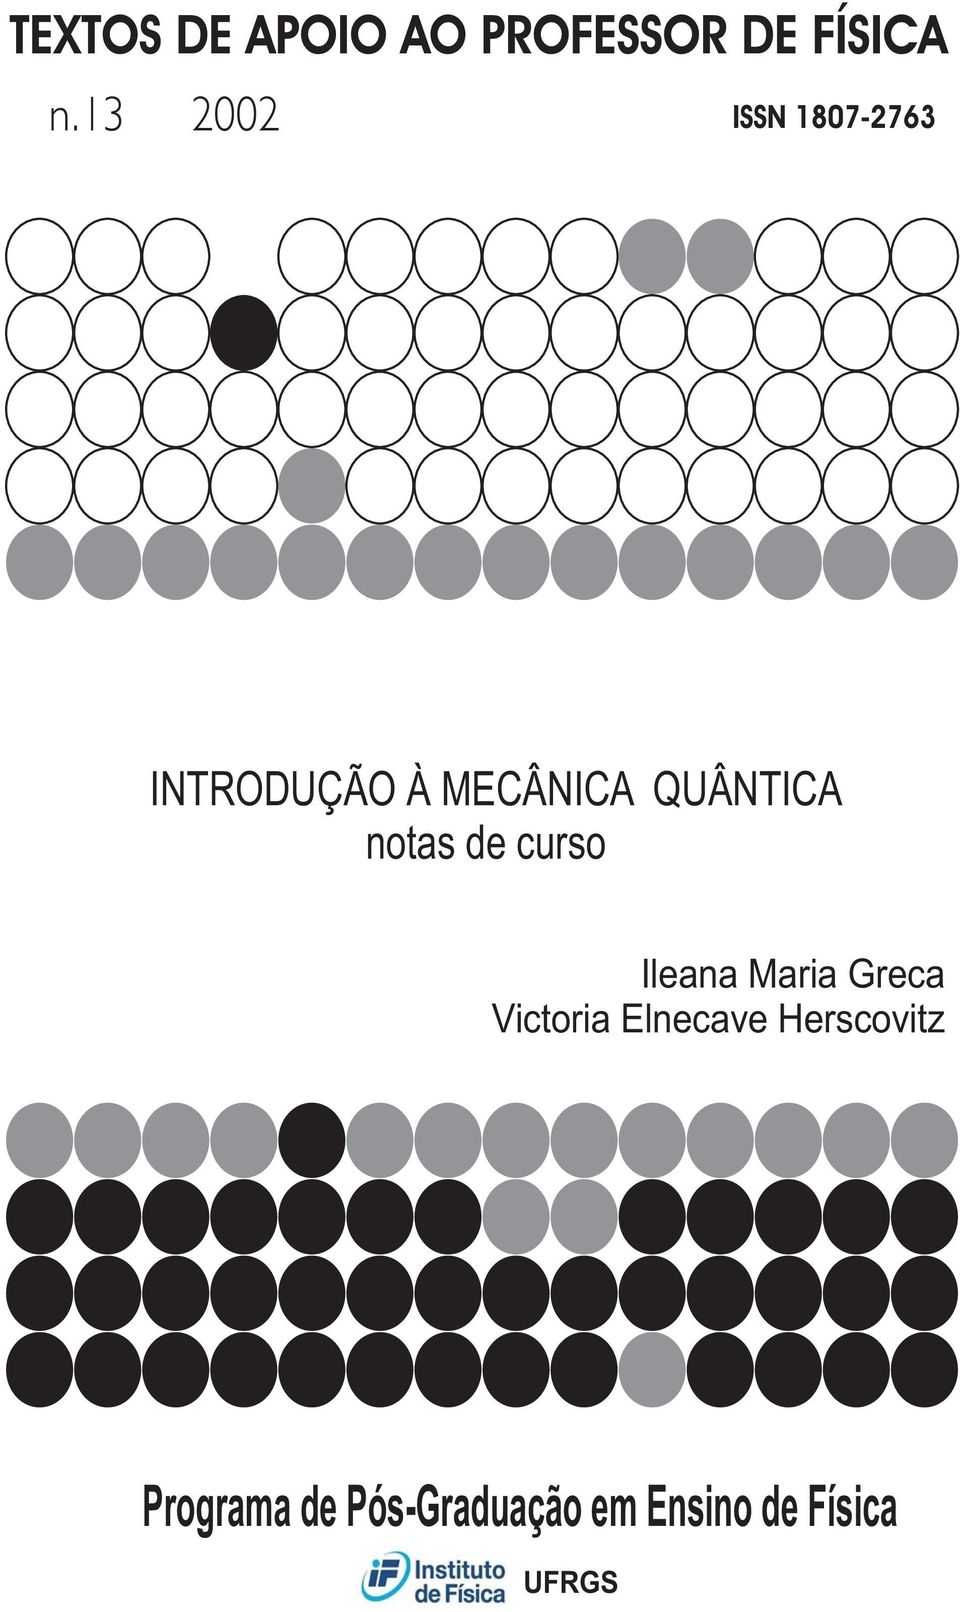 Victoria Elnecave Herscovitz Programa